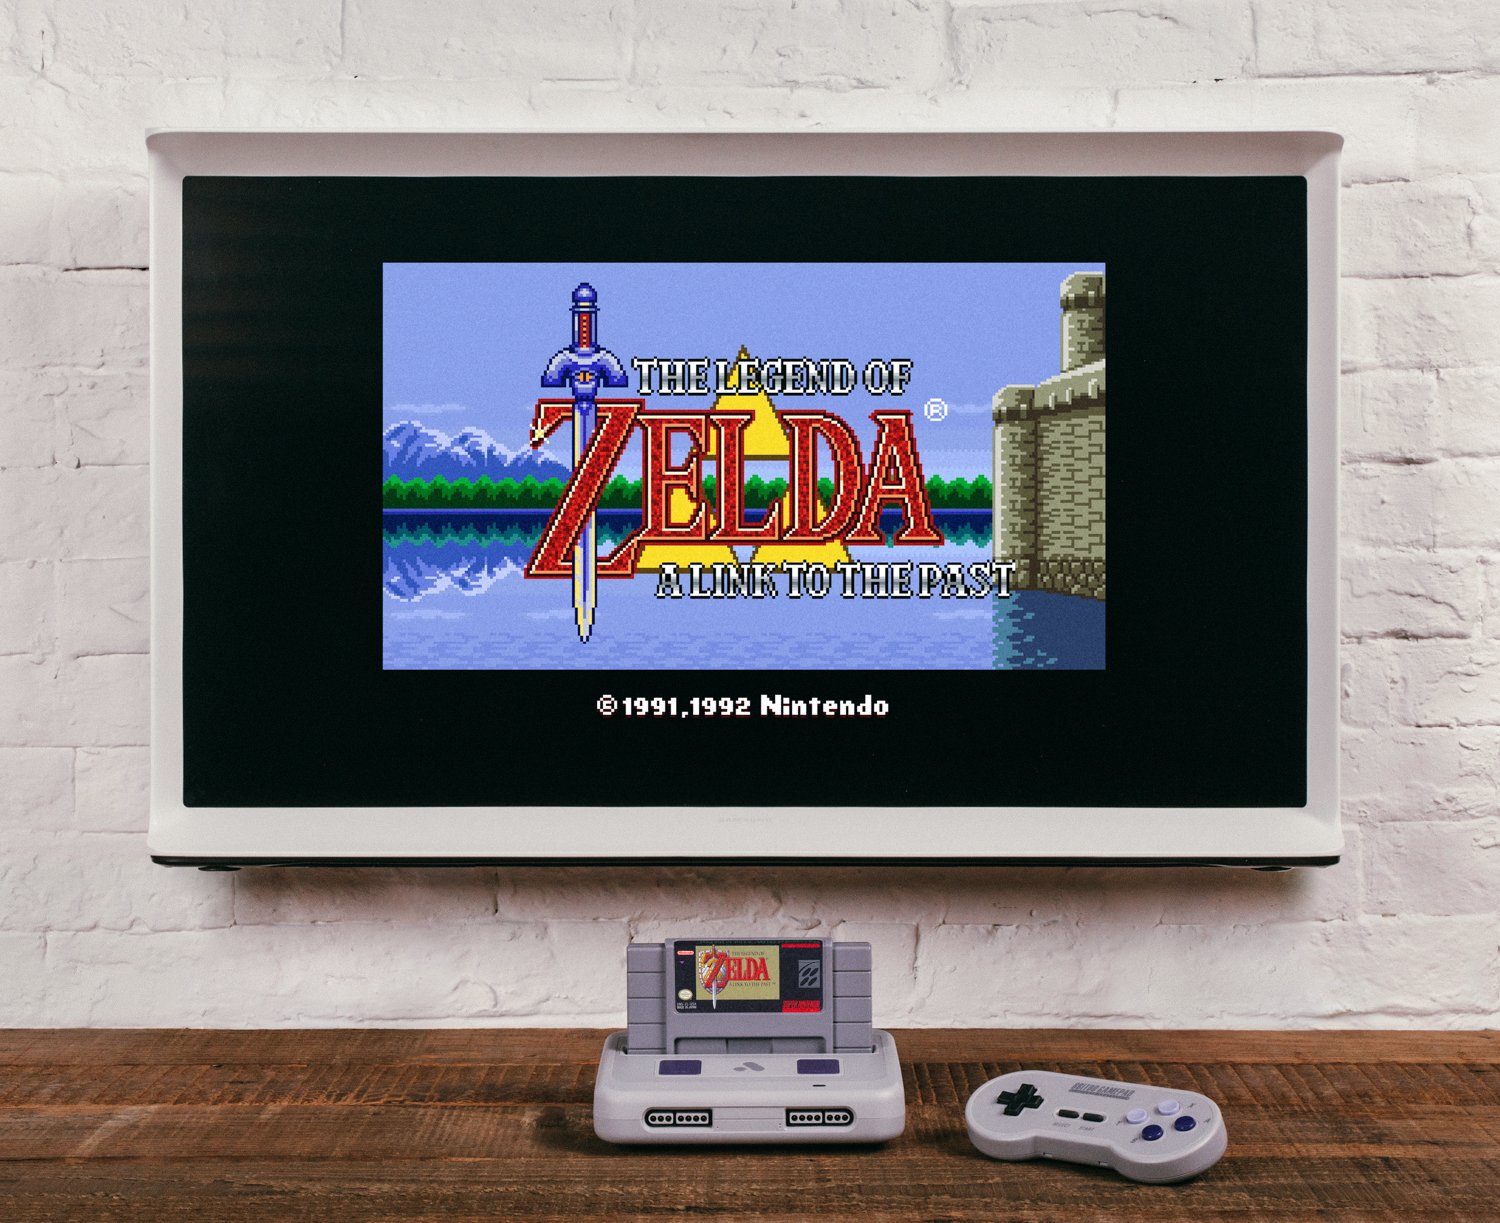 The Legend of Zelda: A Link to the Past (Nintendo SNES, 1992)